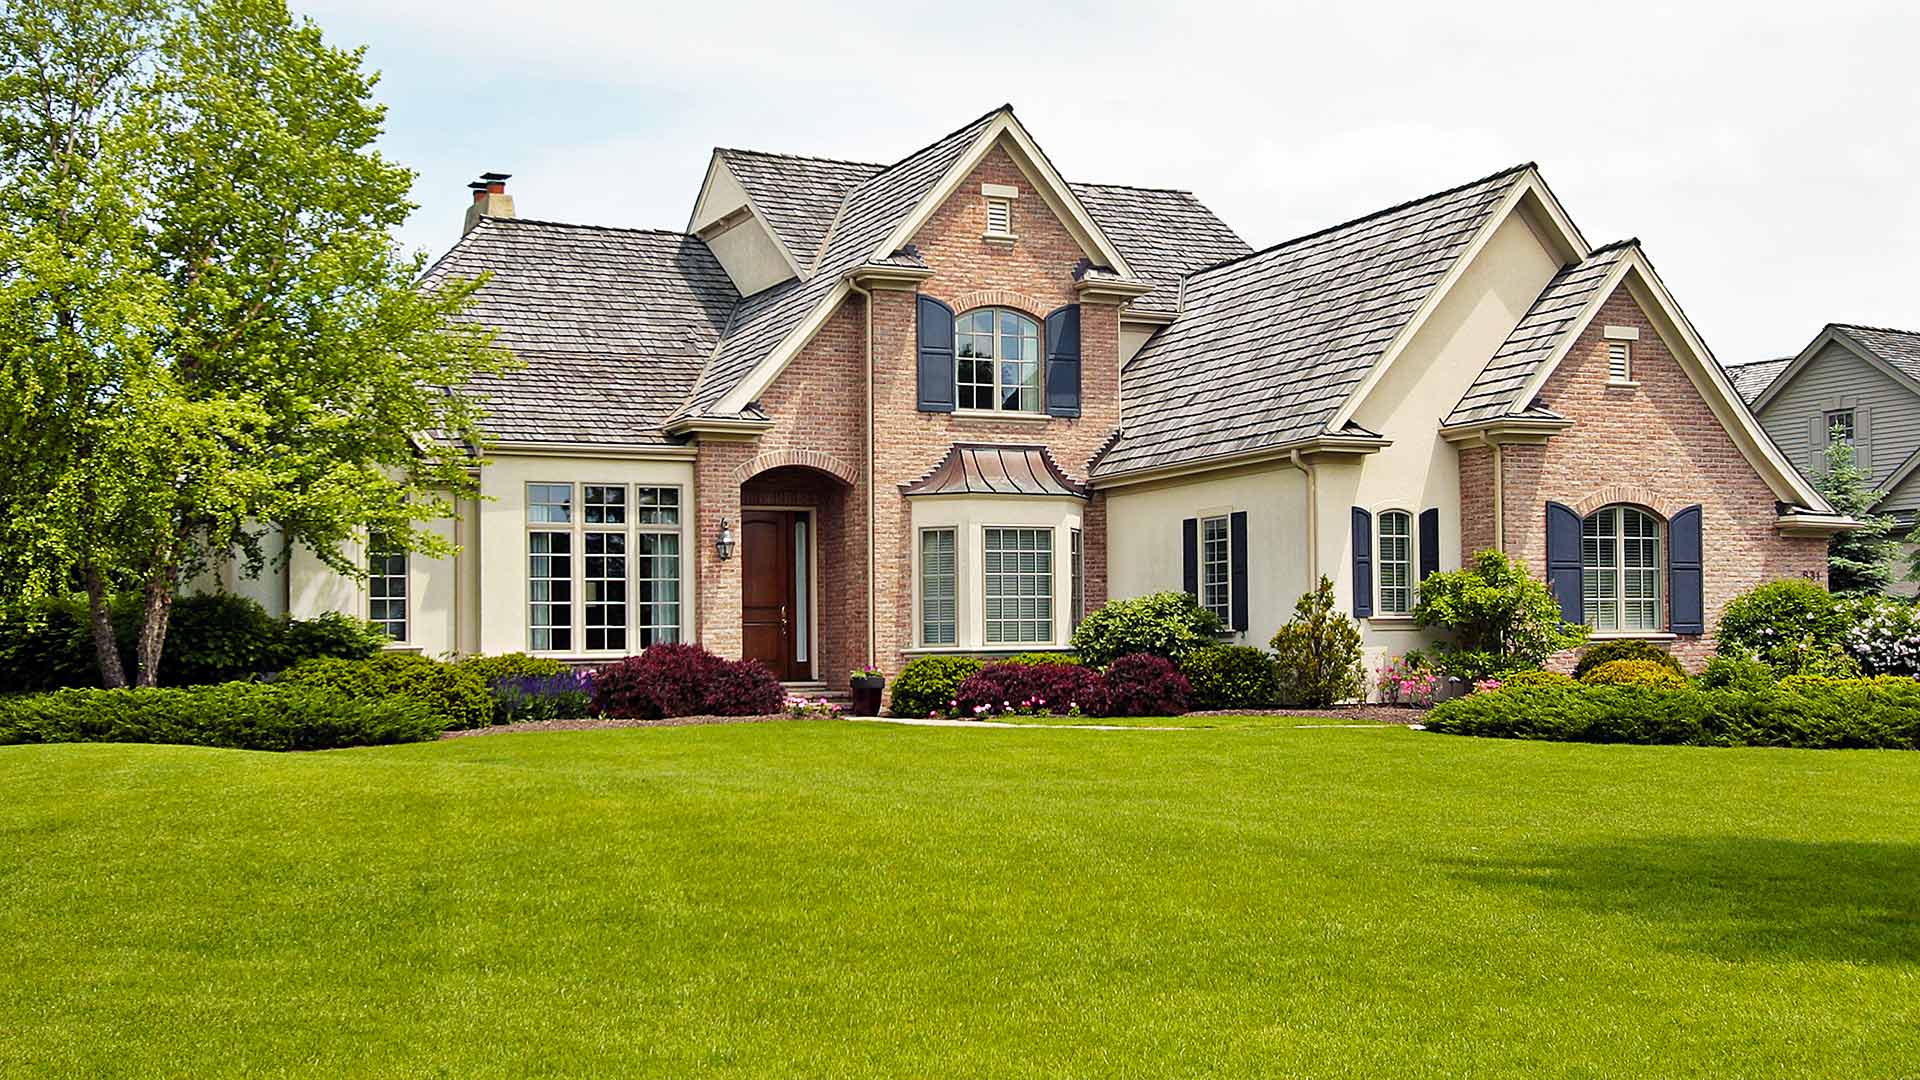 Beautiful home with lush, green lawn near Carmel, Indiana.